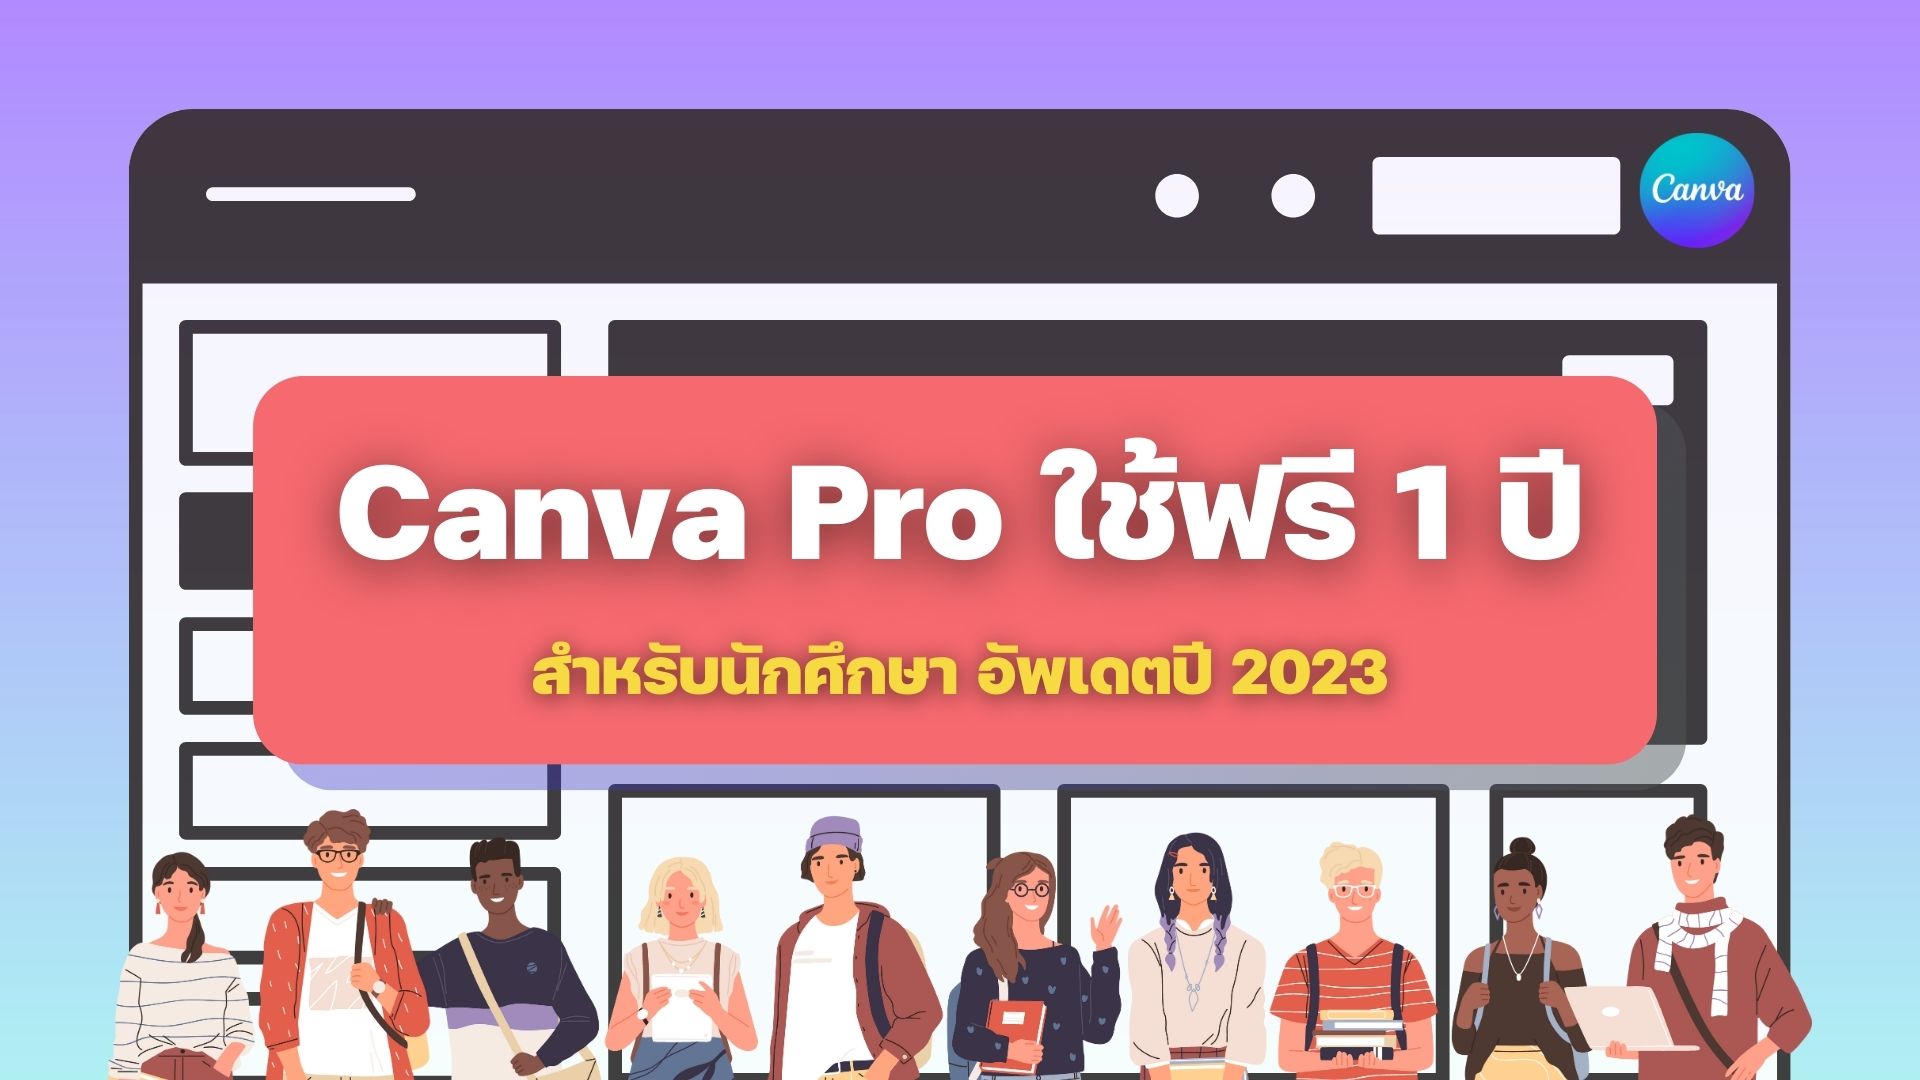 Canva Pro นักศึกษา